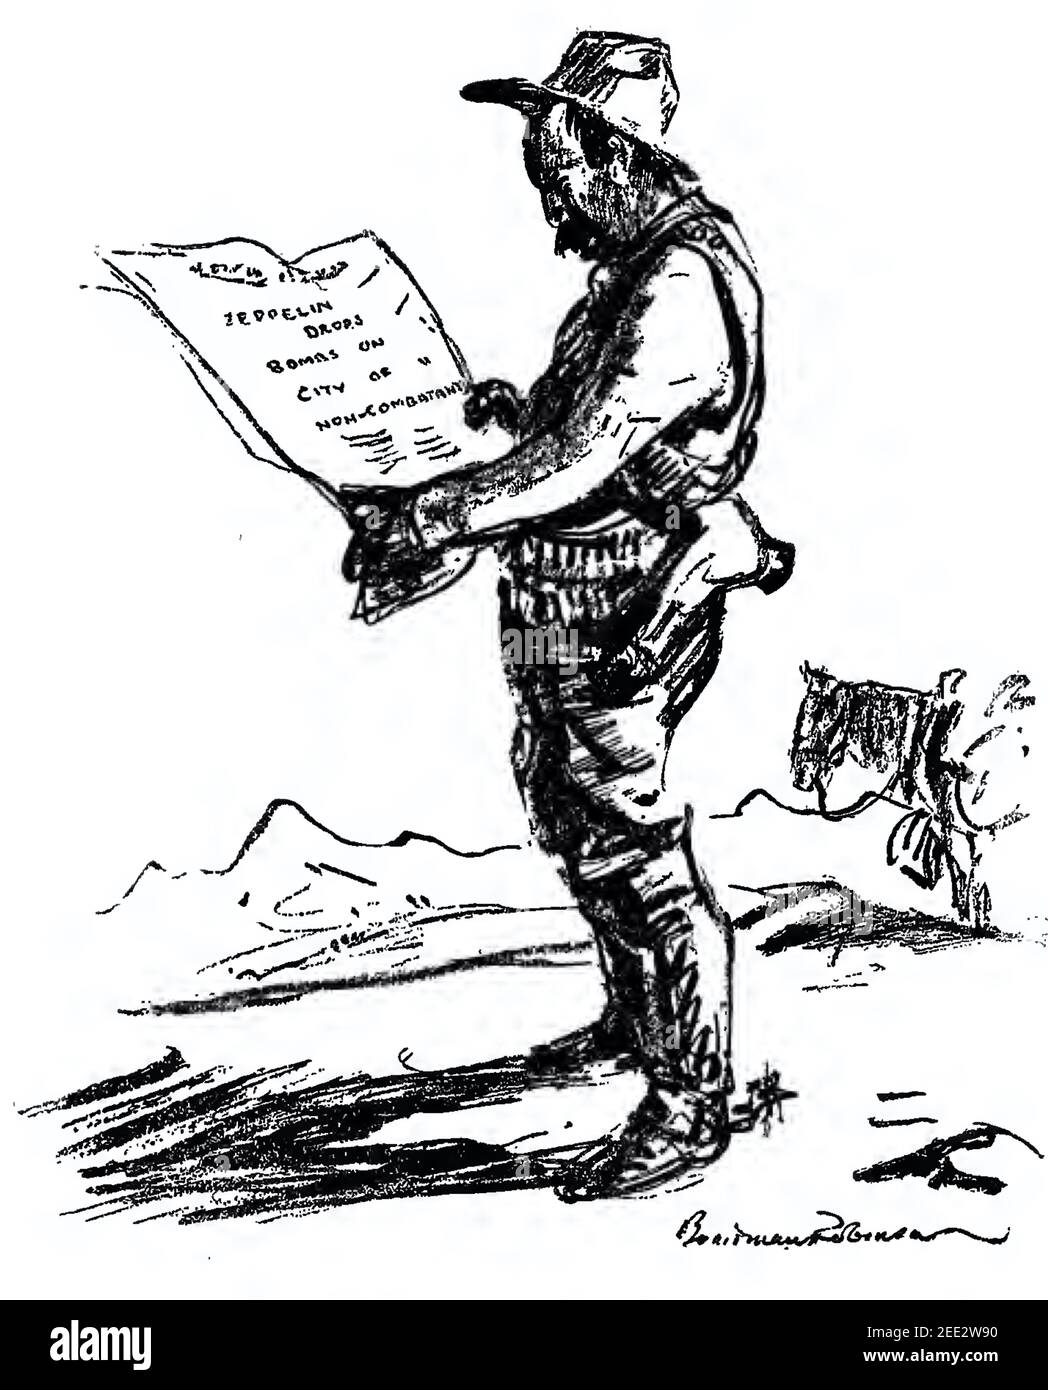 Boardman Robinson cartoon regarding the First World War Stock Photo